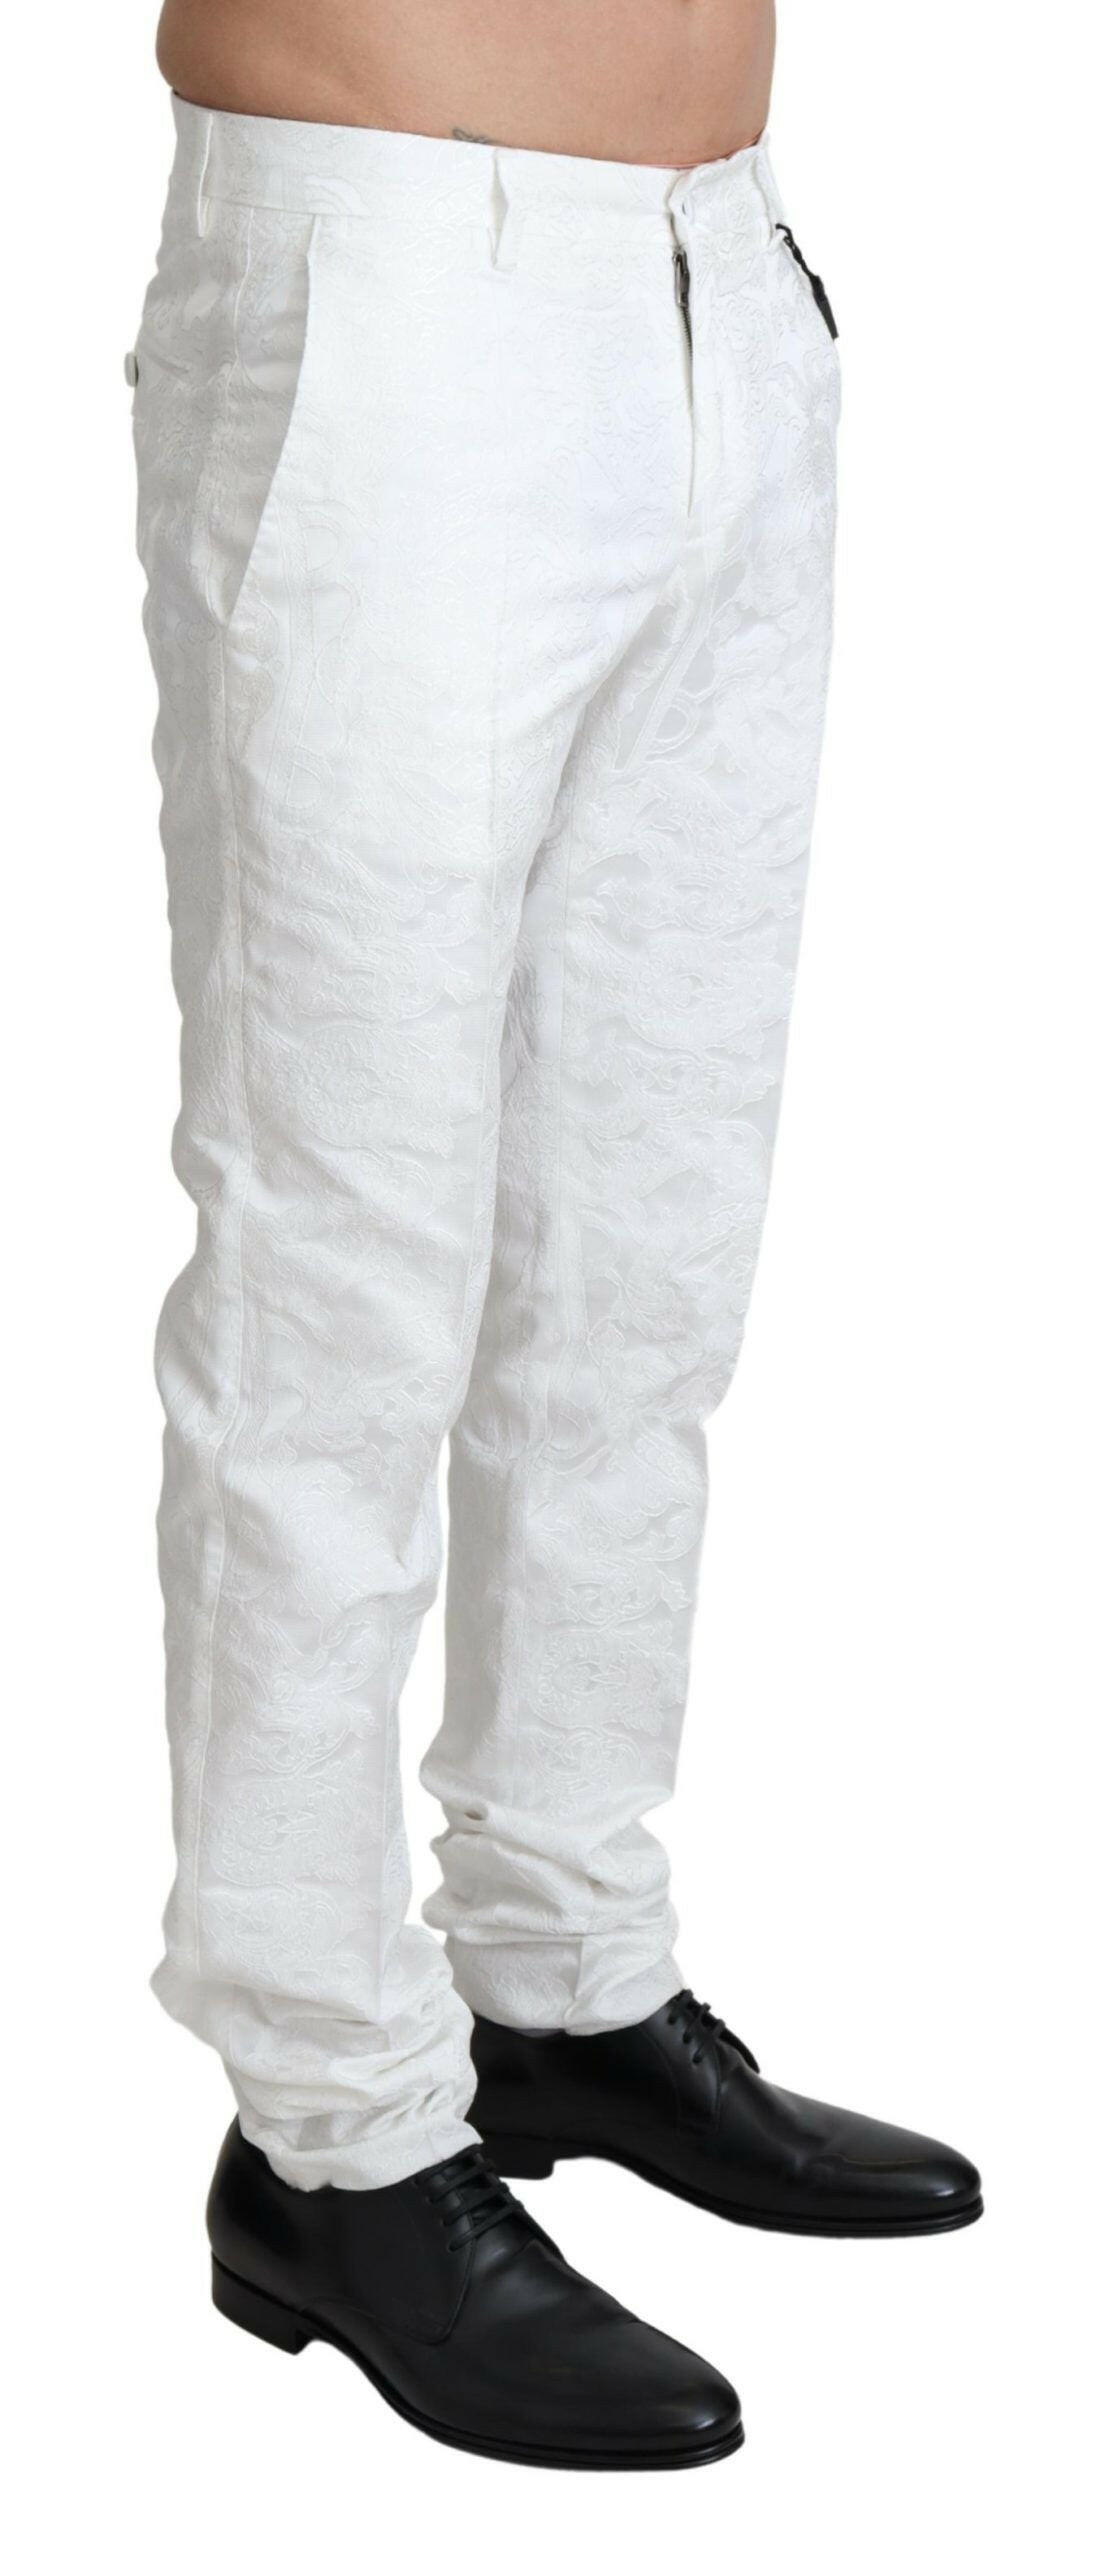 Dolce & Gabbana White Brocade Jaquard Dress Trouser Pants - GENUINE AUTHENTIC BRAND LLC  